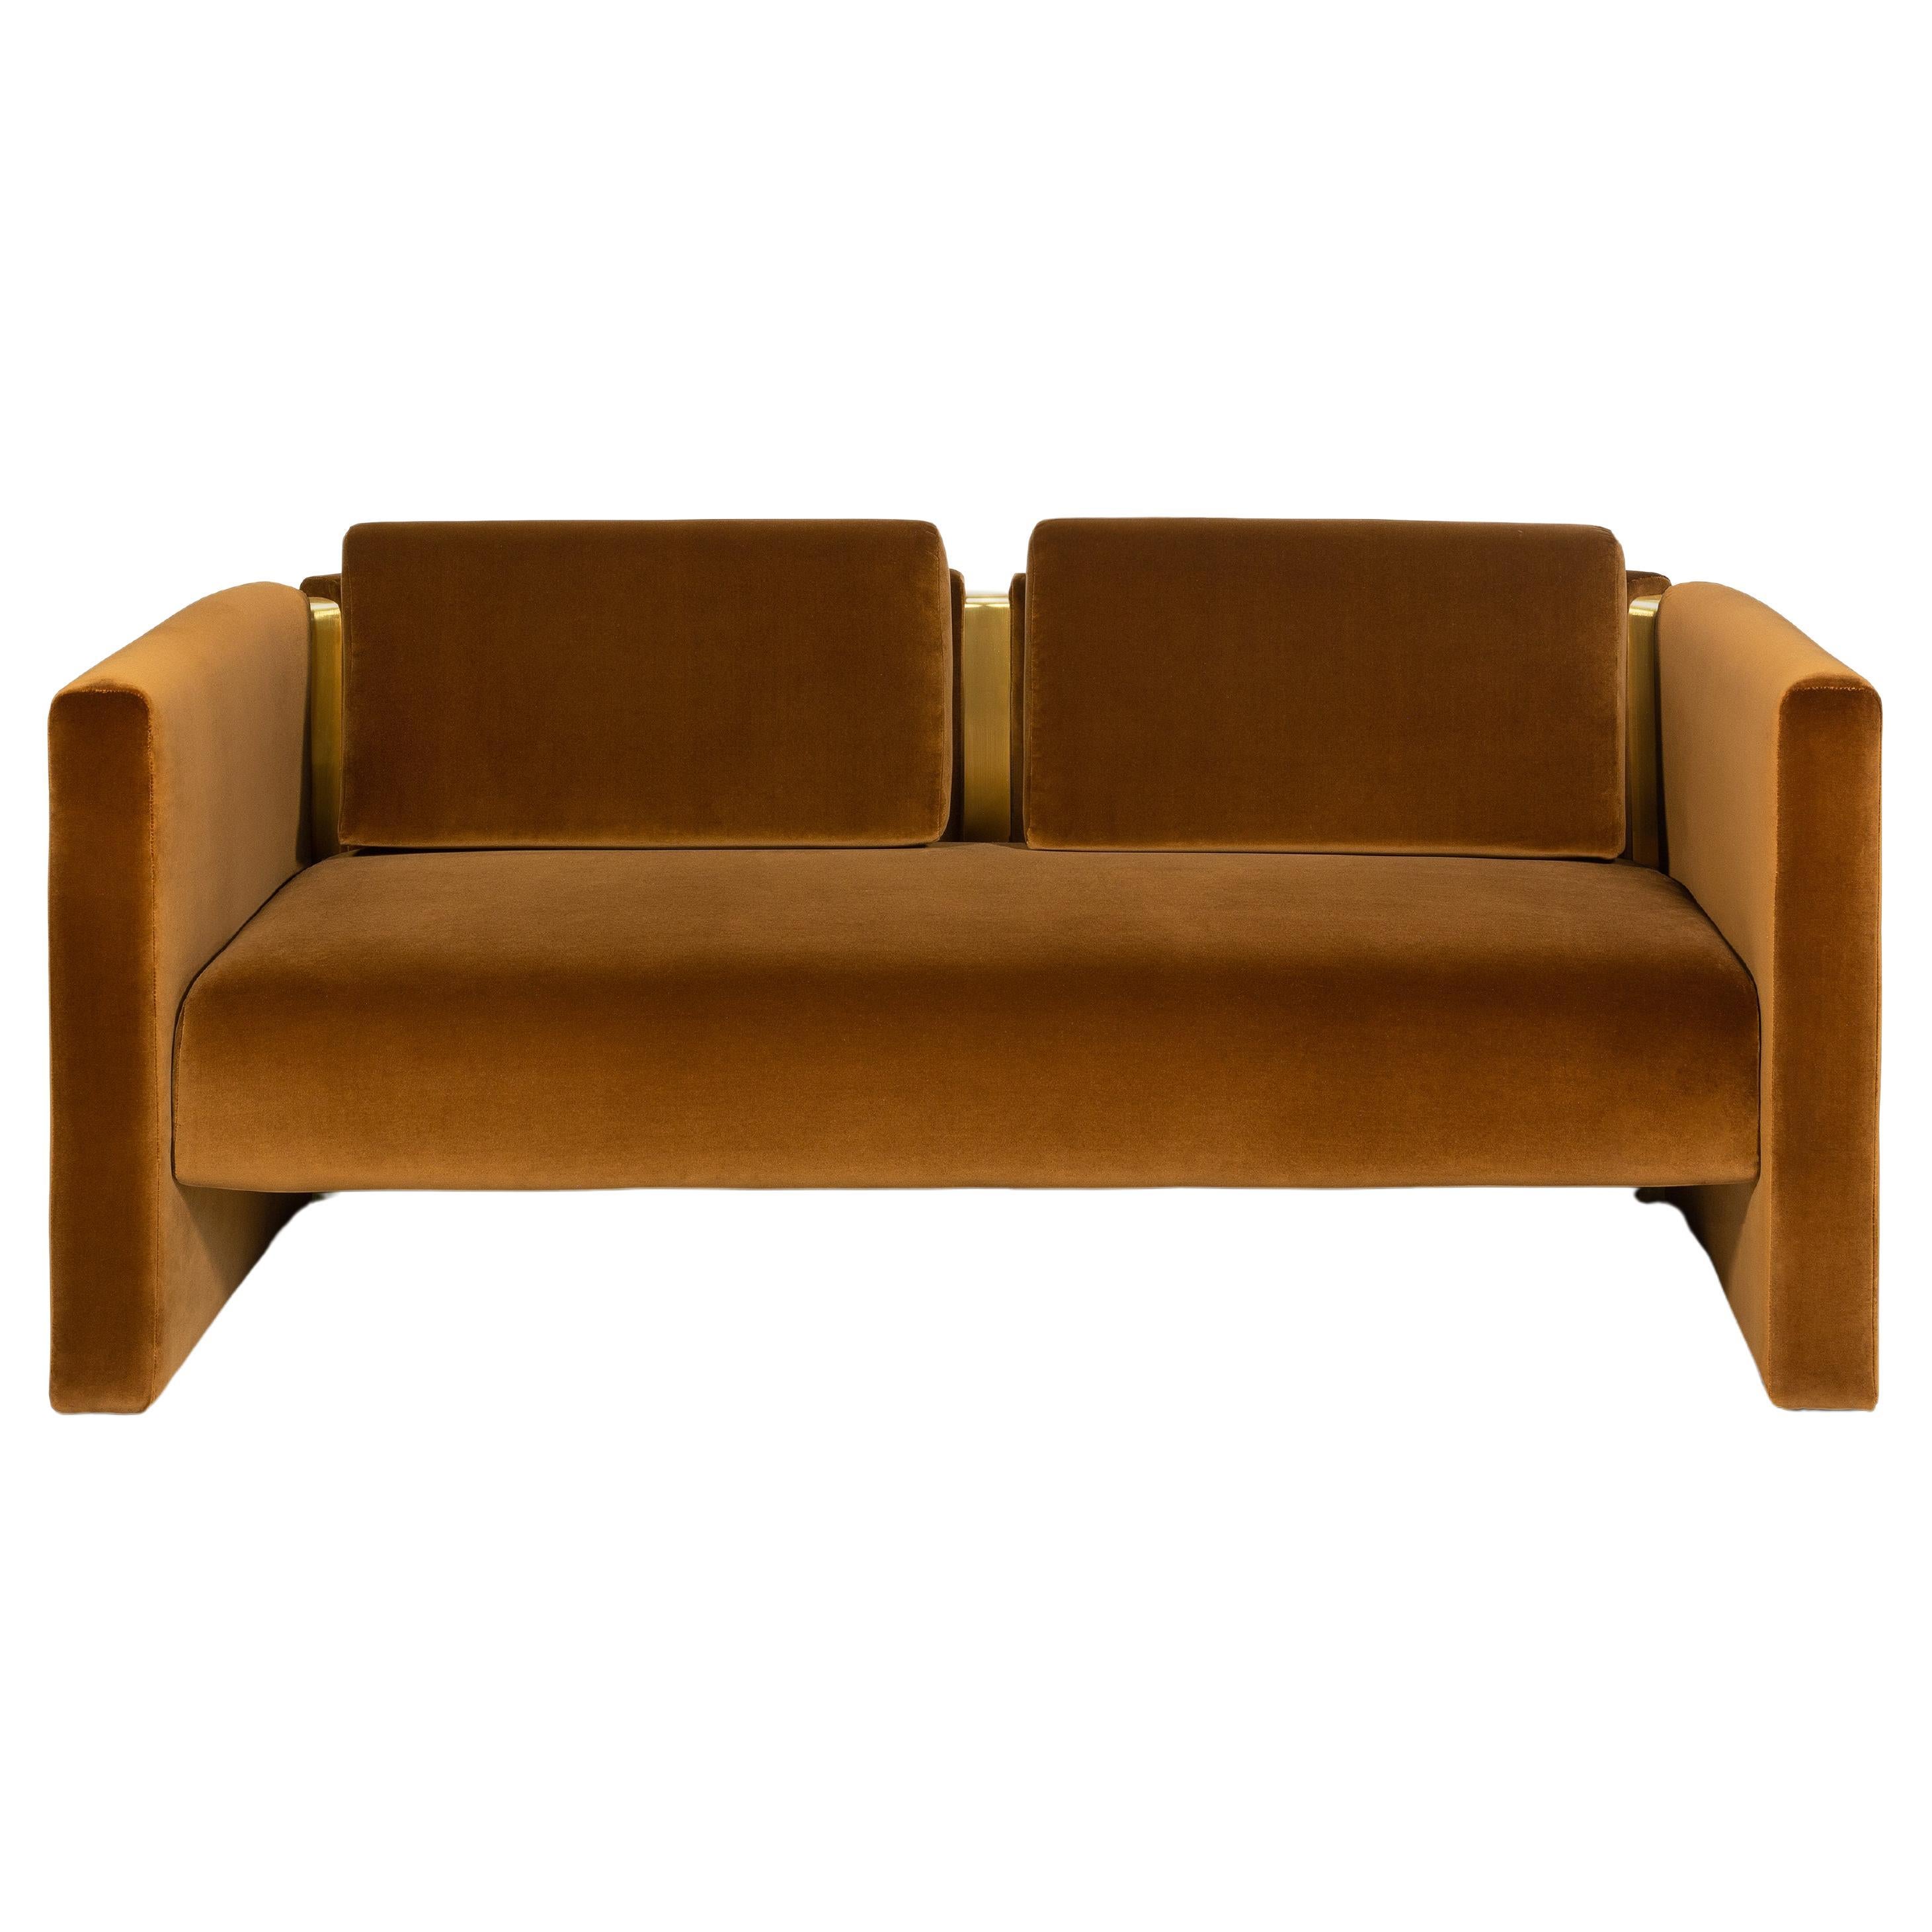 Fernandine II Seat Sofa by InsidherLand